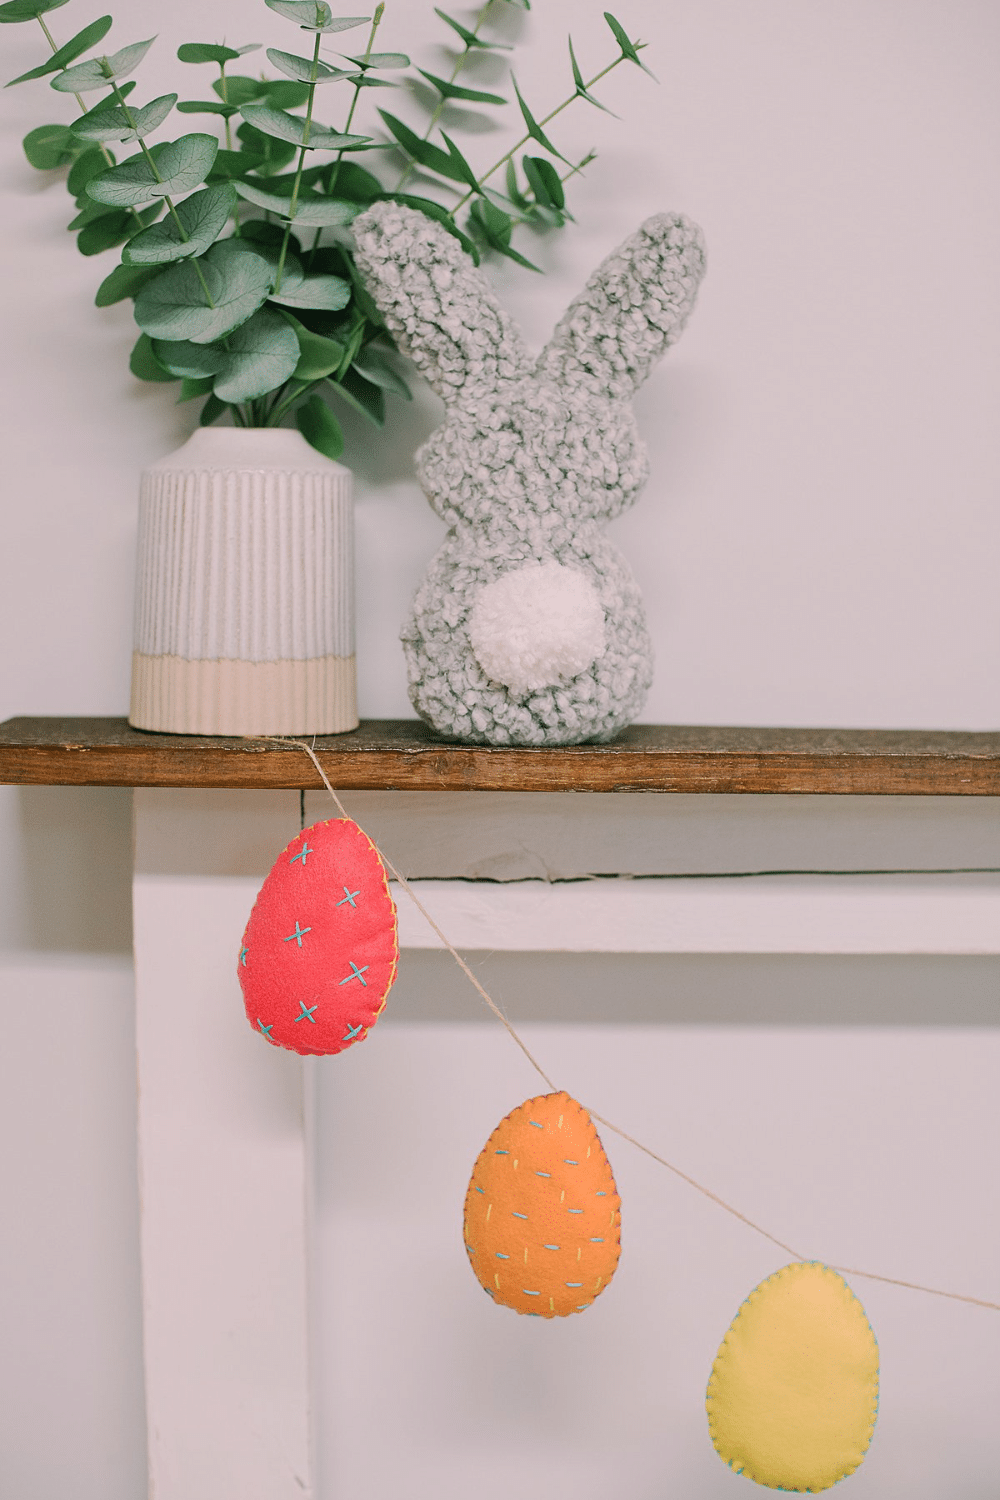 How to Make a Felt Easter Egg Garland